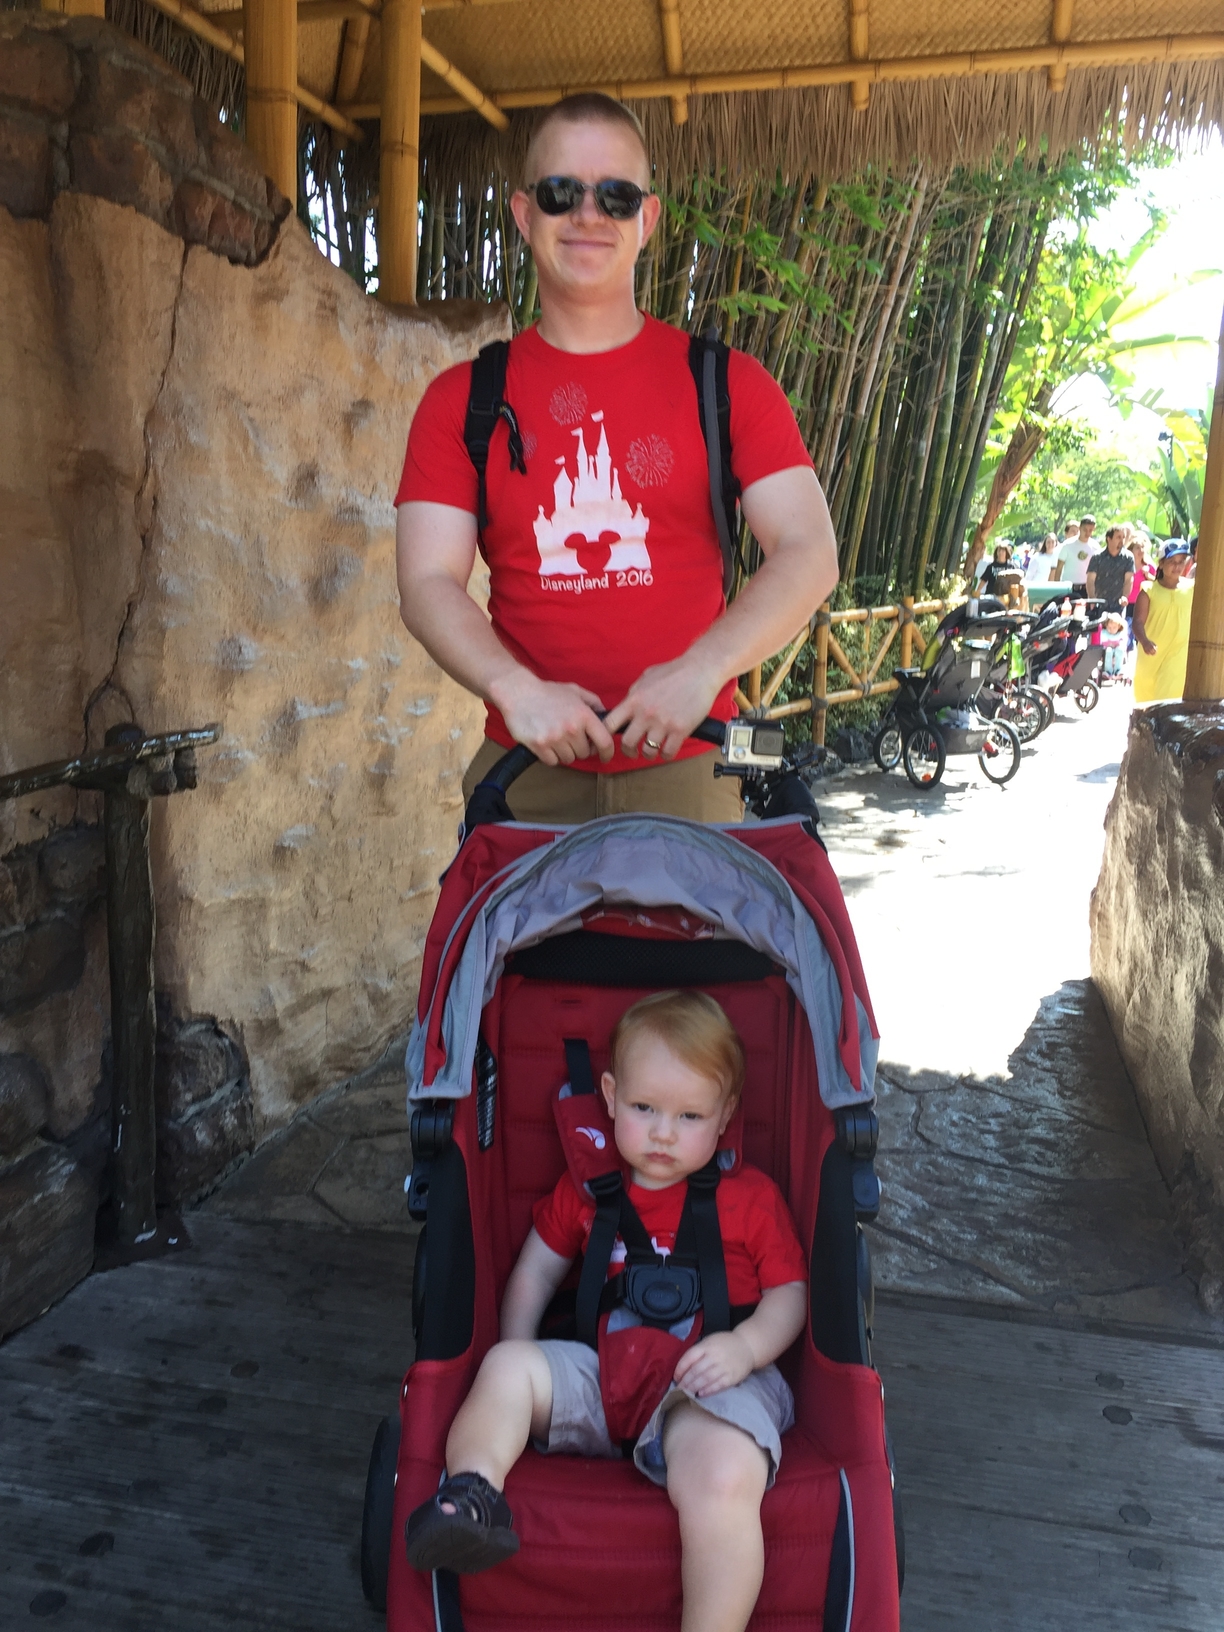 Enjoy exploring Disneyland with your toddler | PassPorter.com